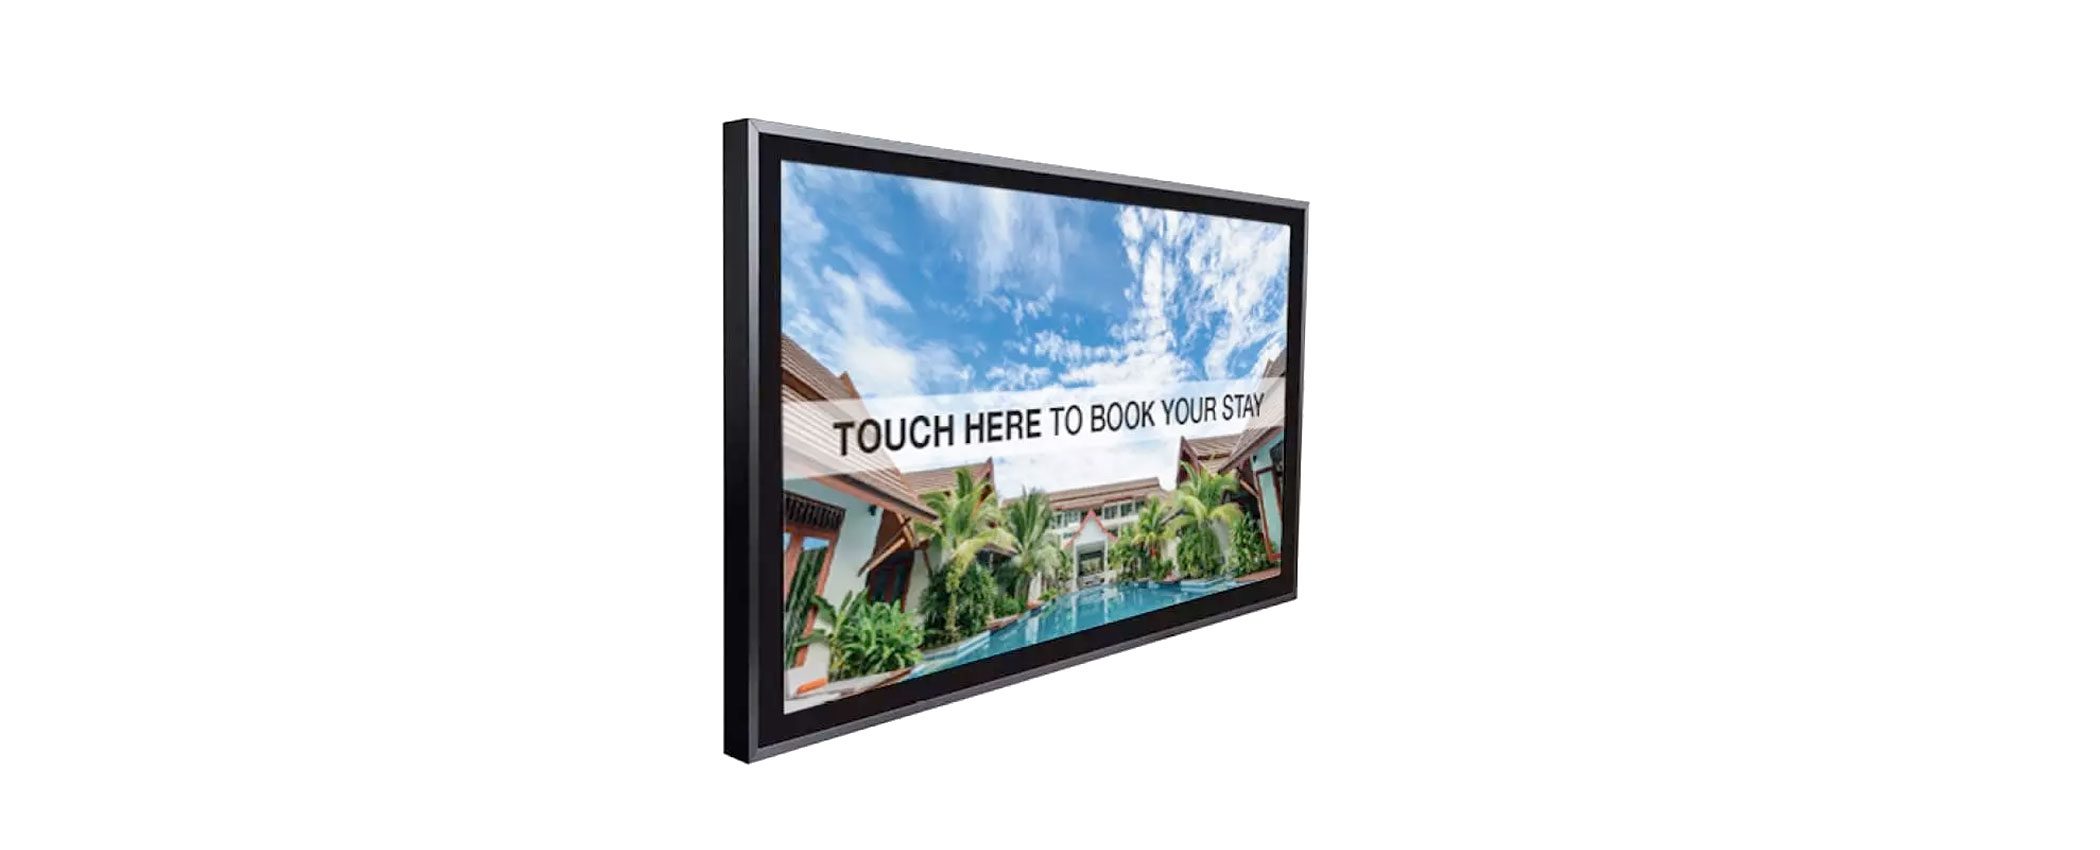 metroclick-touch-screen-monitors